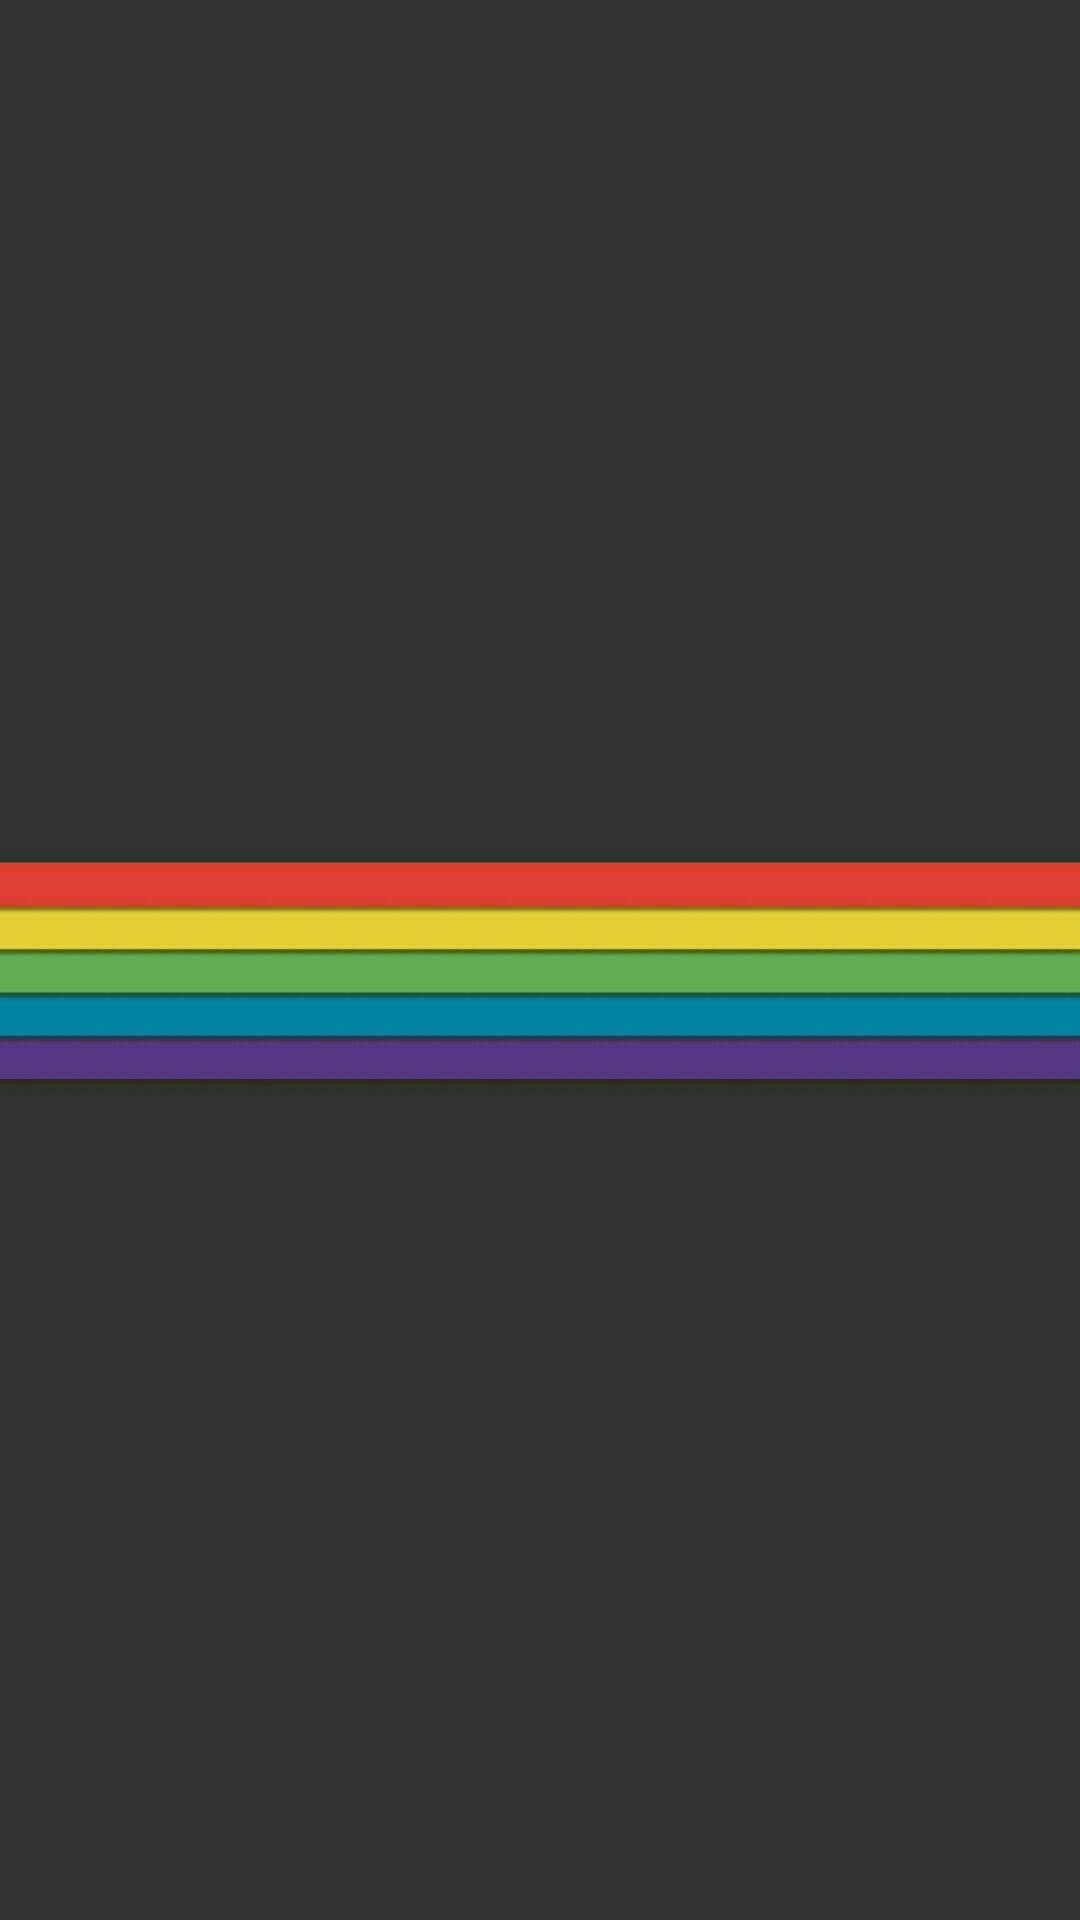 The rainbow flag on a black background - Pride, LGBT, gay